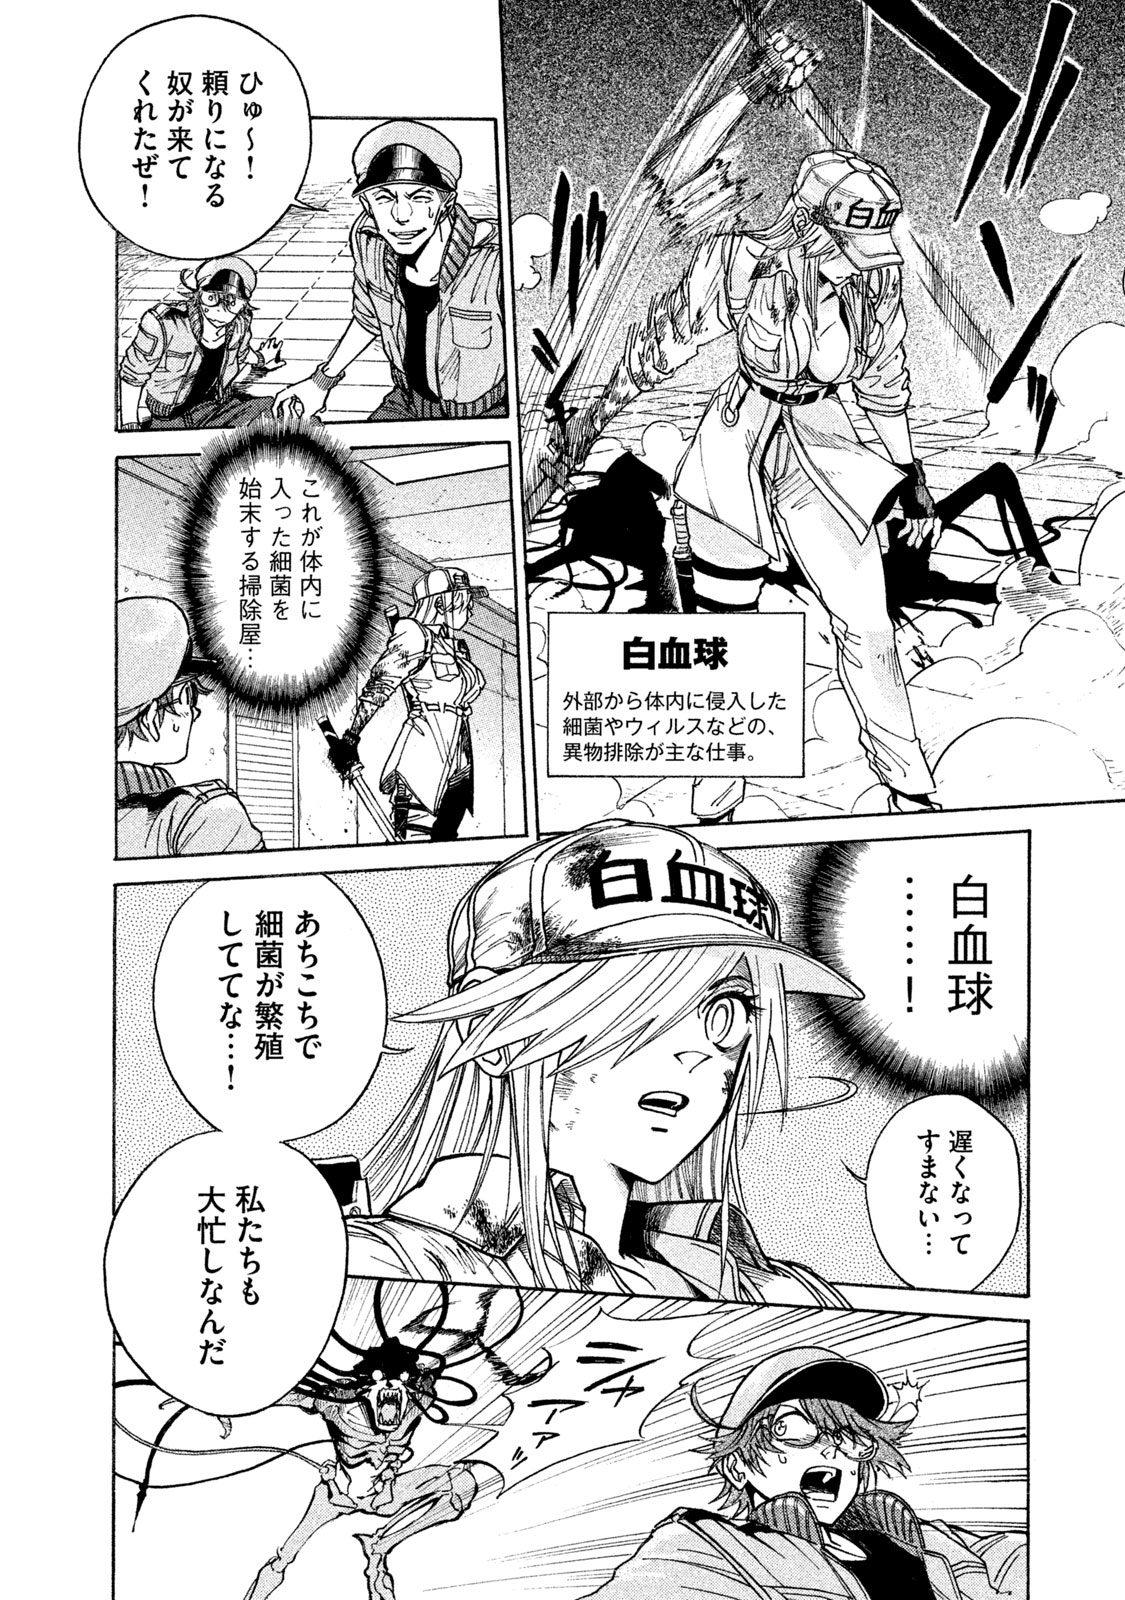 Hataraku Saibou BLACK - Chapter 1 - Page 26